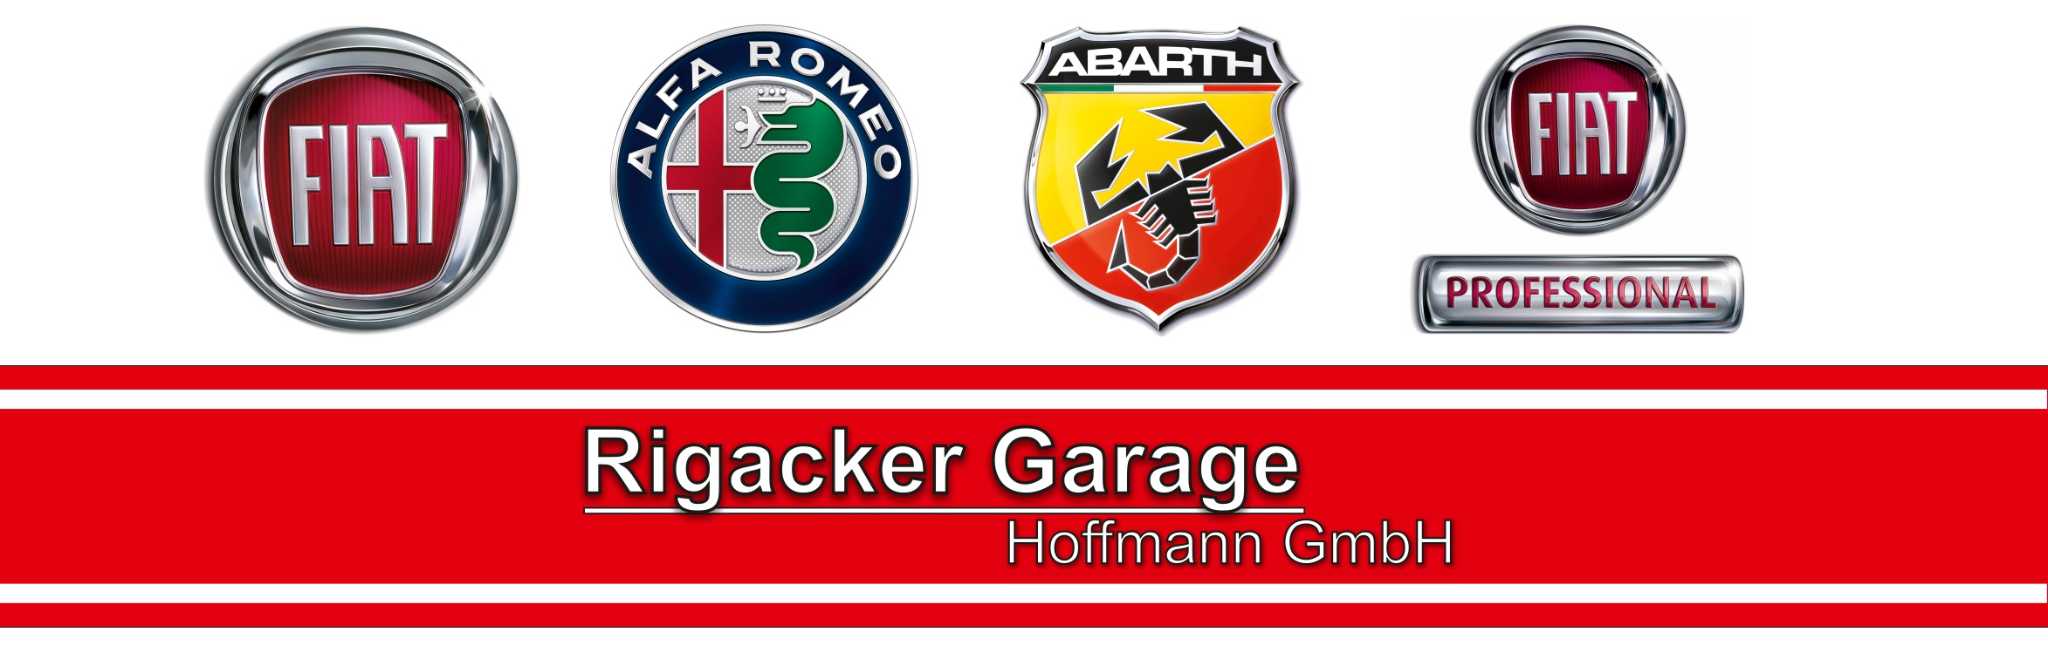 Rigacker Garage